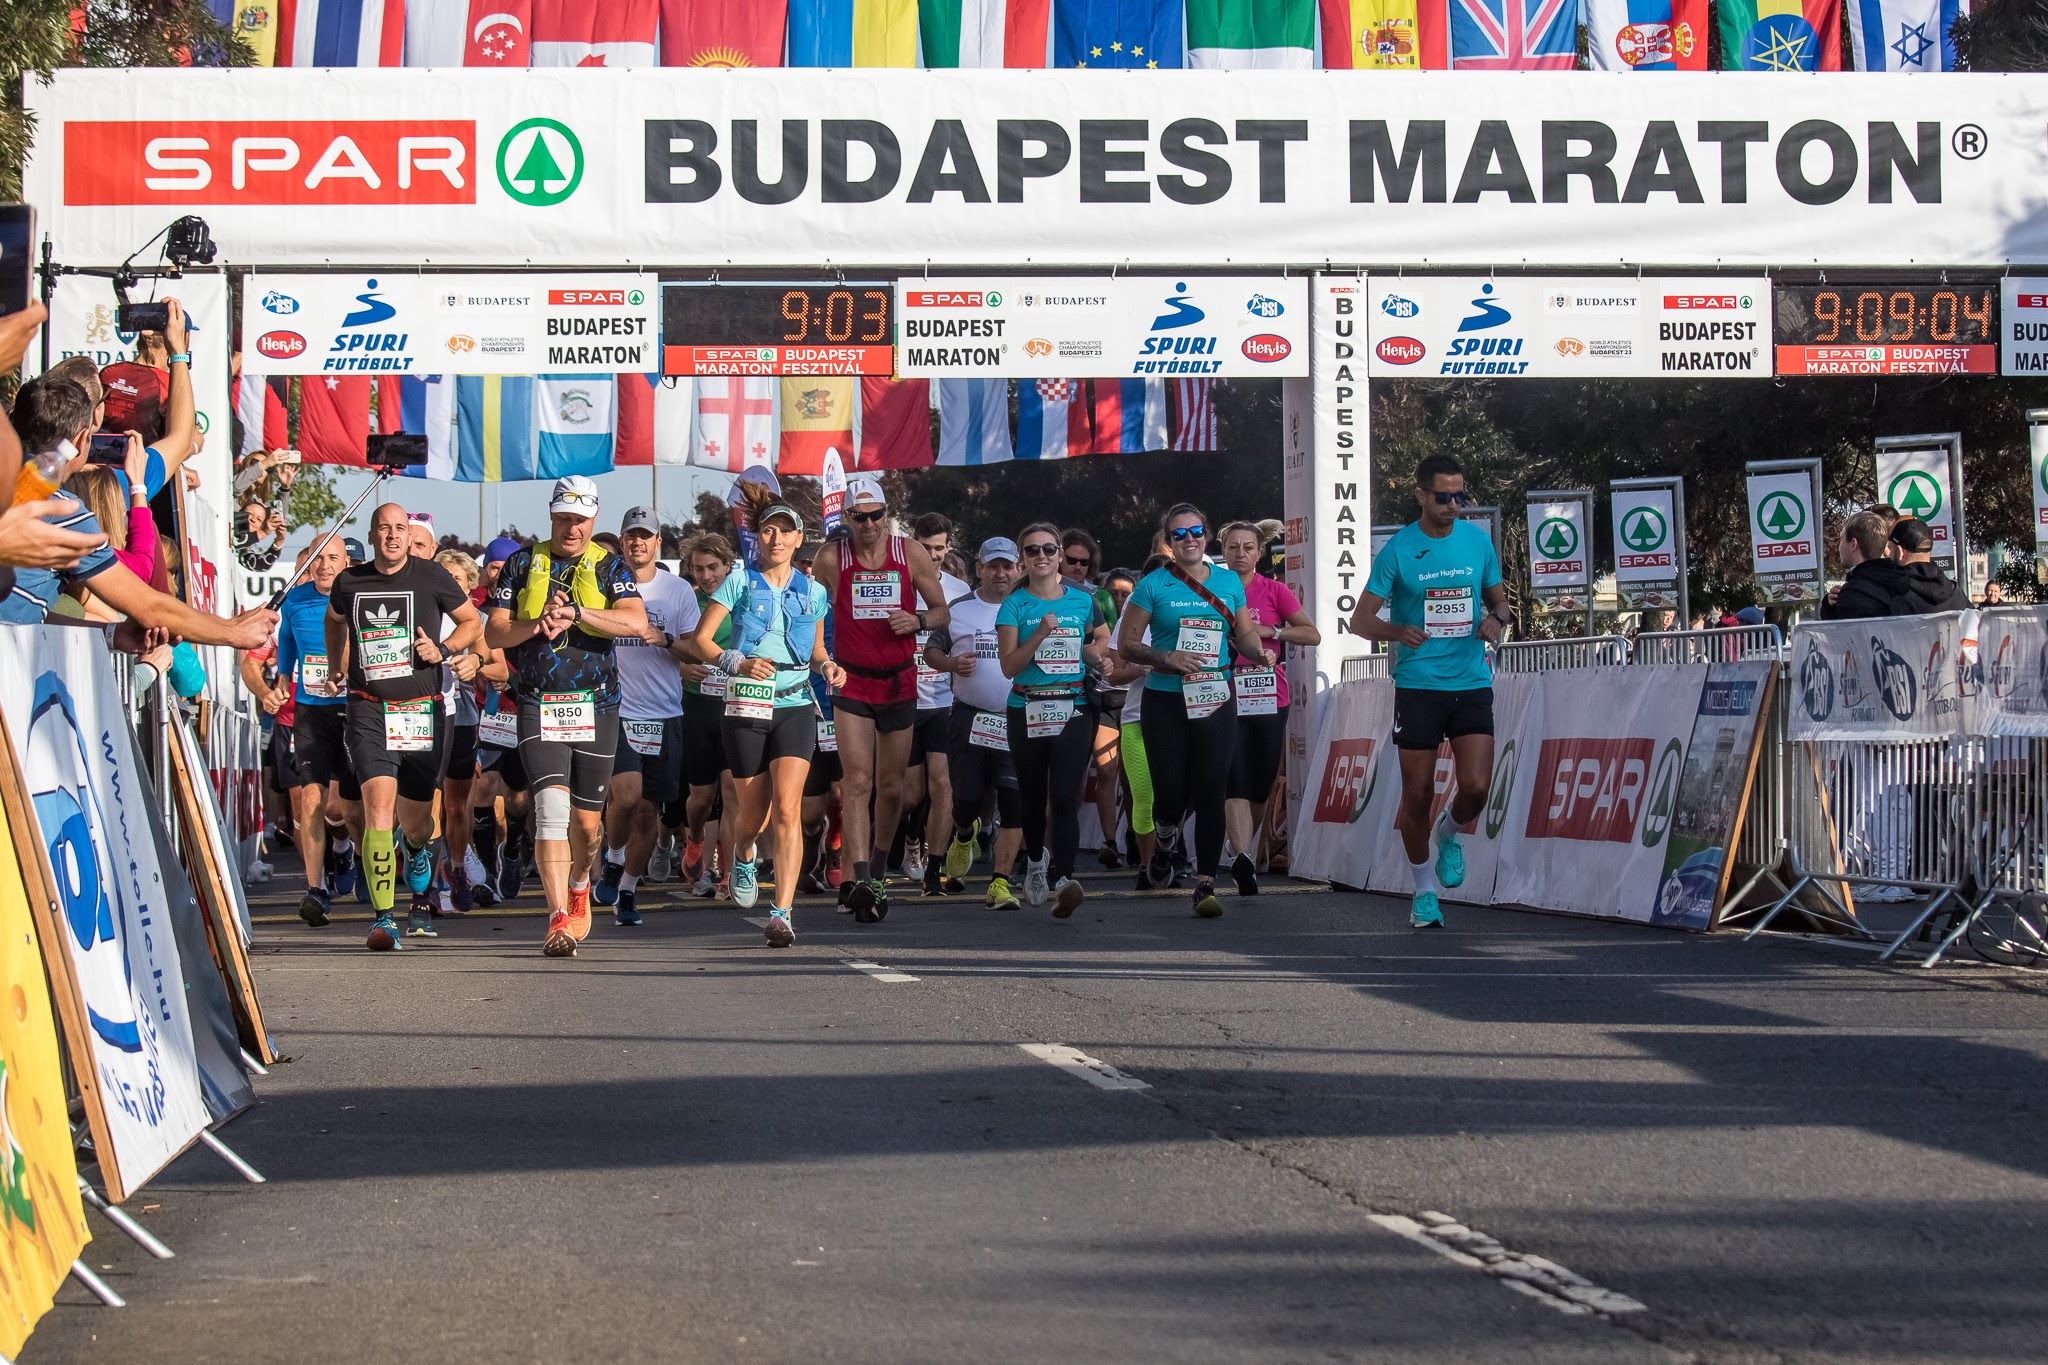 Sportal TV: Rengetegen futottak a 37. SPAR Budapest Maratonon